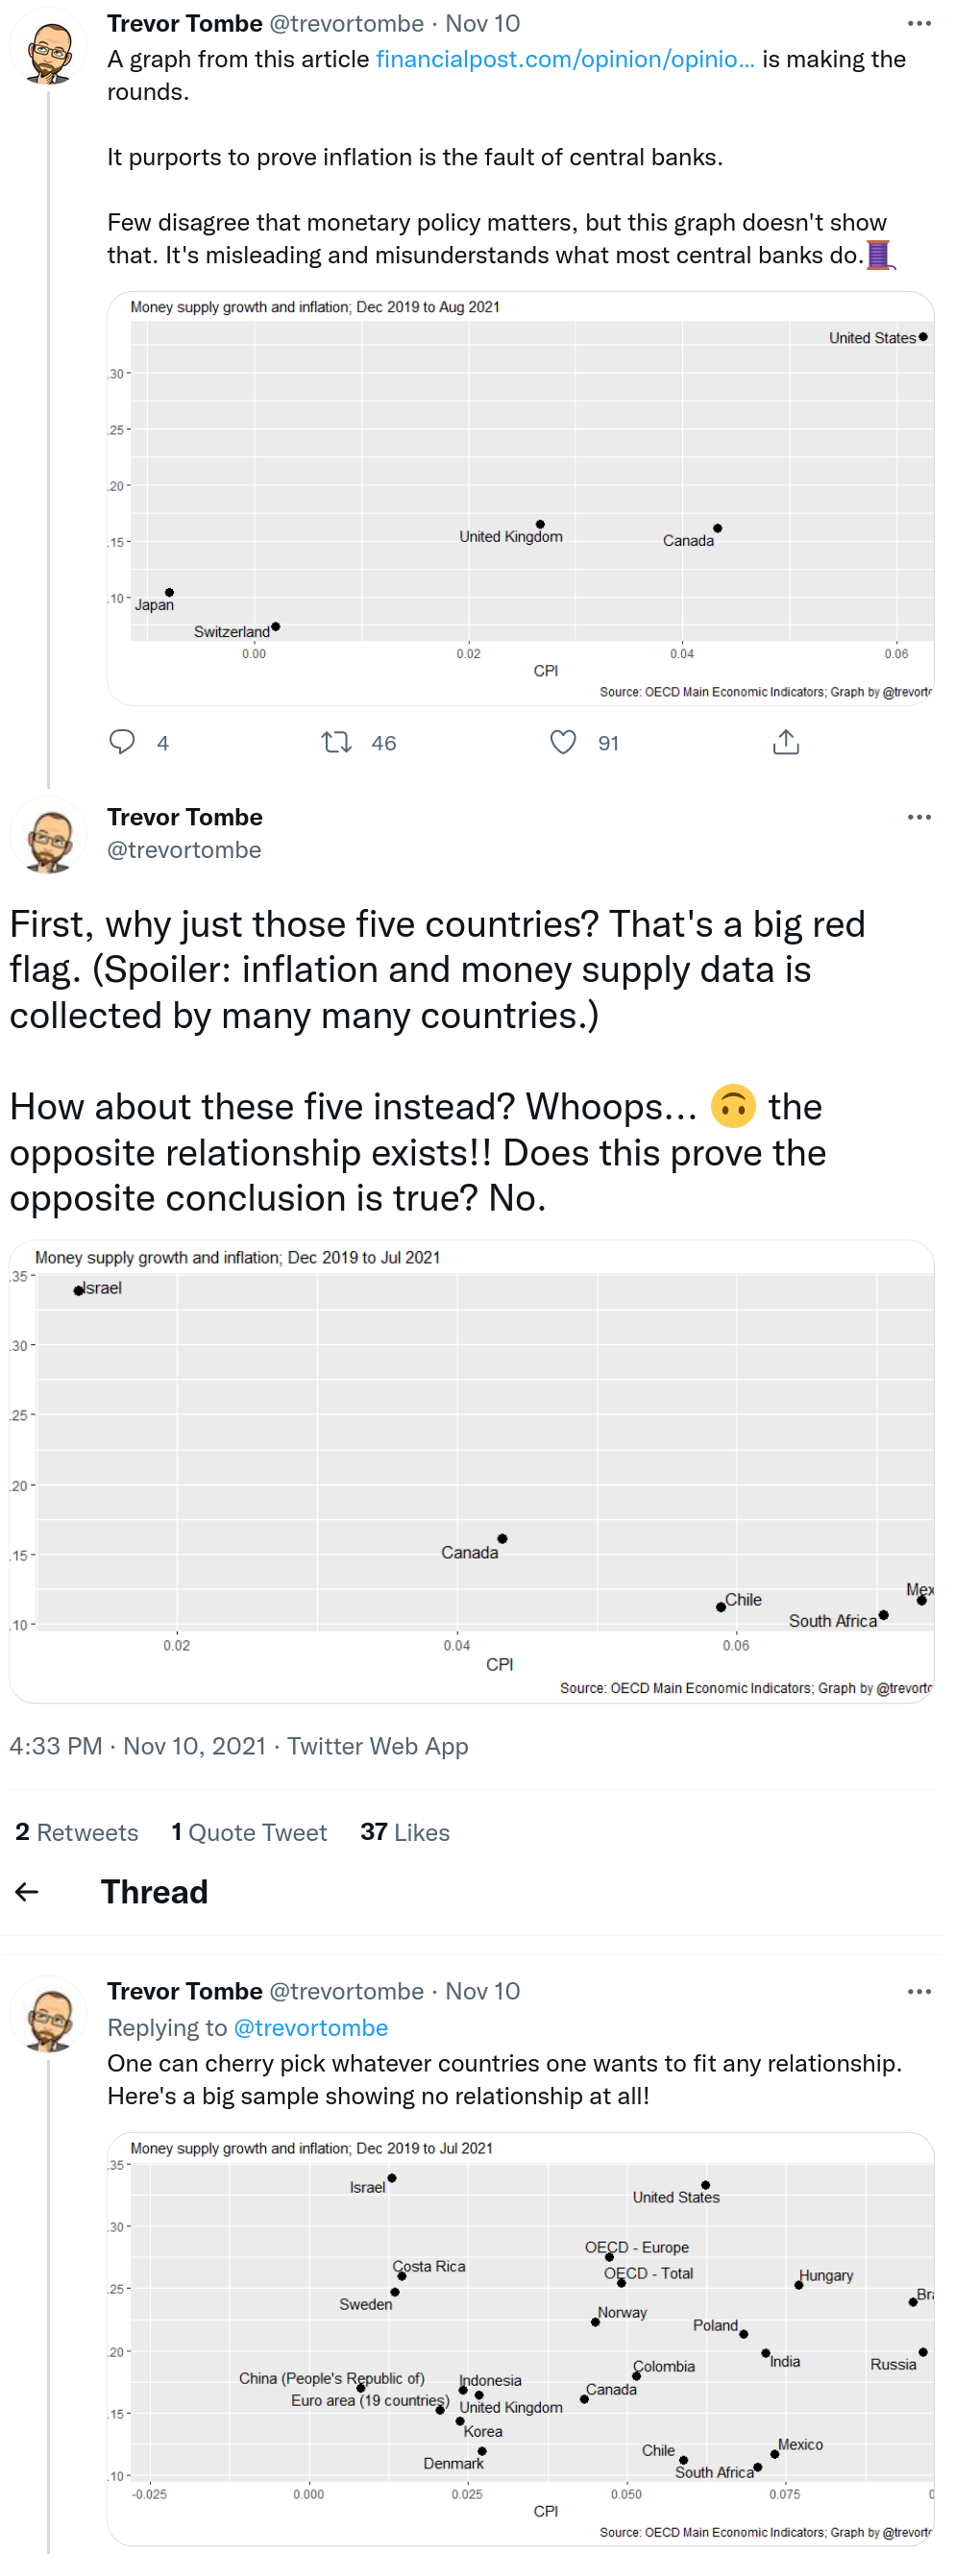 trevor_tombe-inflation-twitter-2021-11-10.png